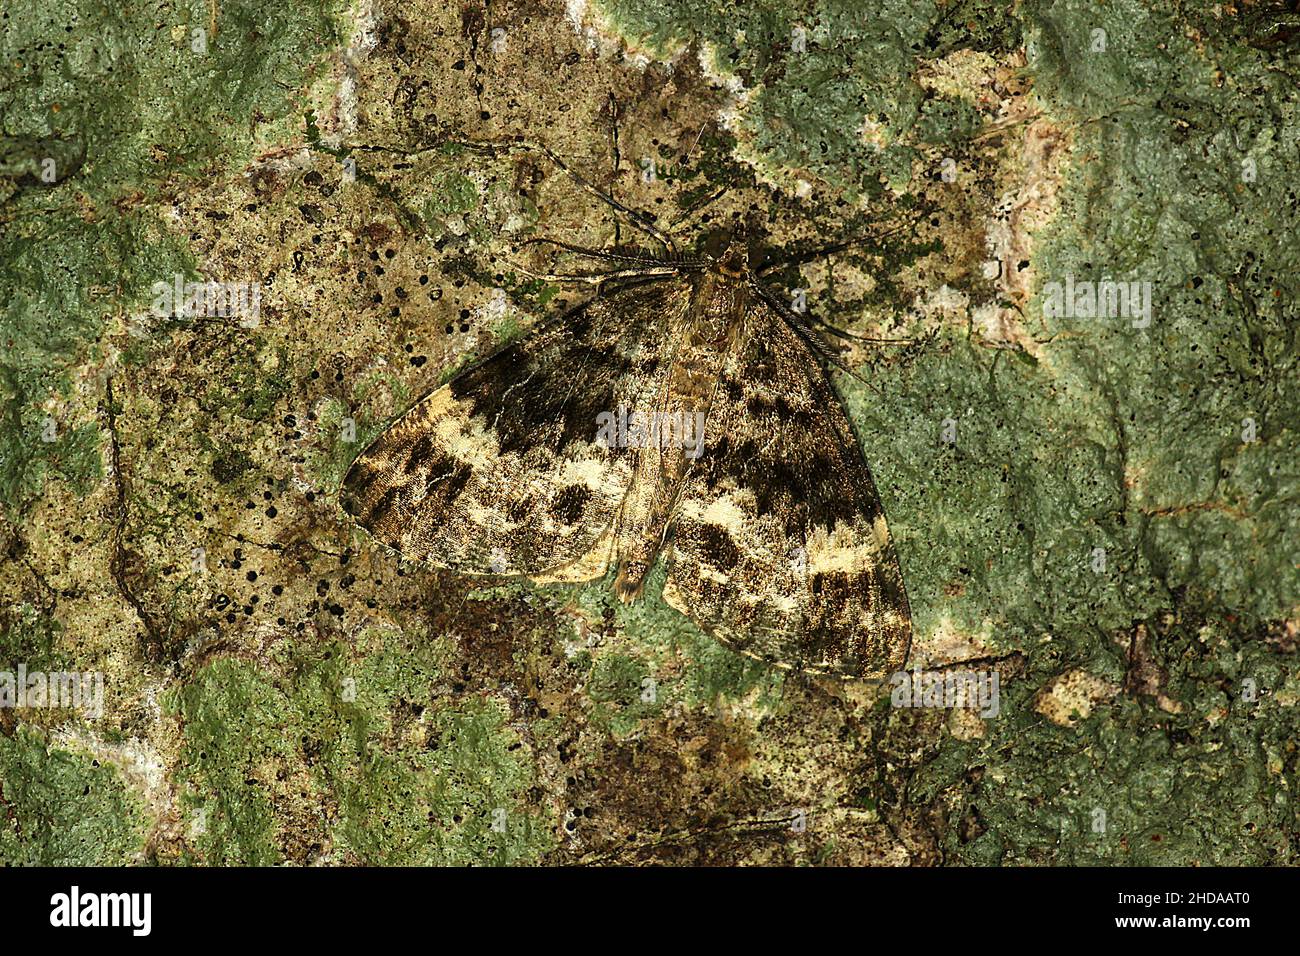 New Zealand geometer moth (Pseudocoremia indistincta) on lichen covered tree trunk Stock Photo